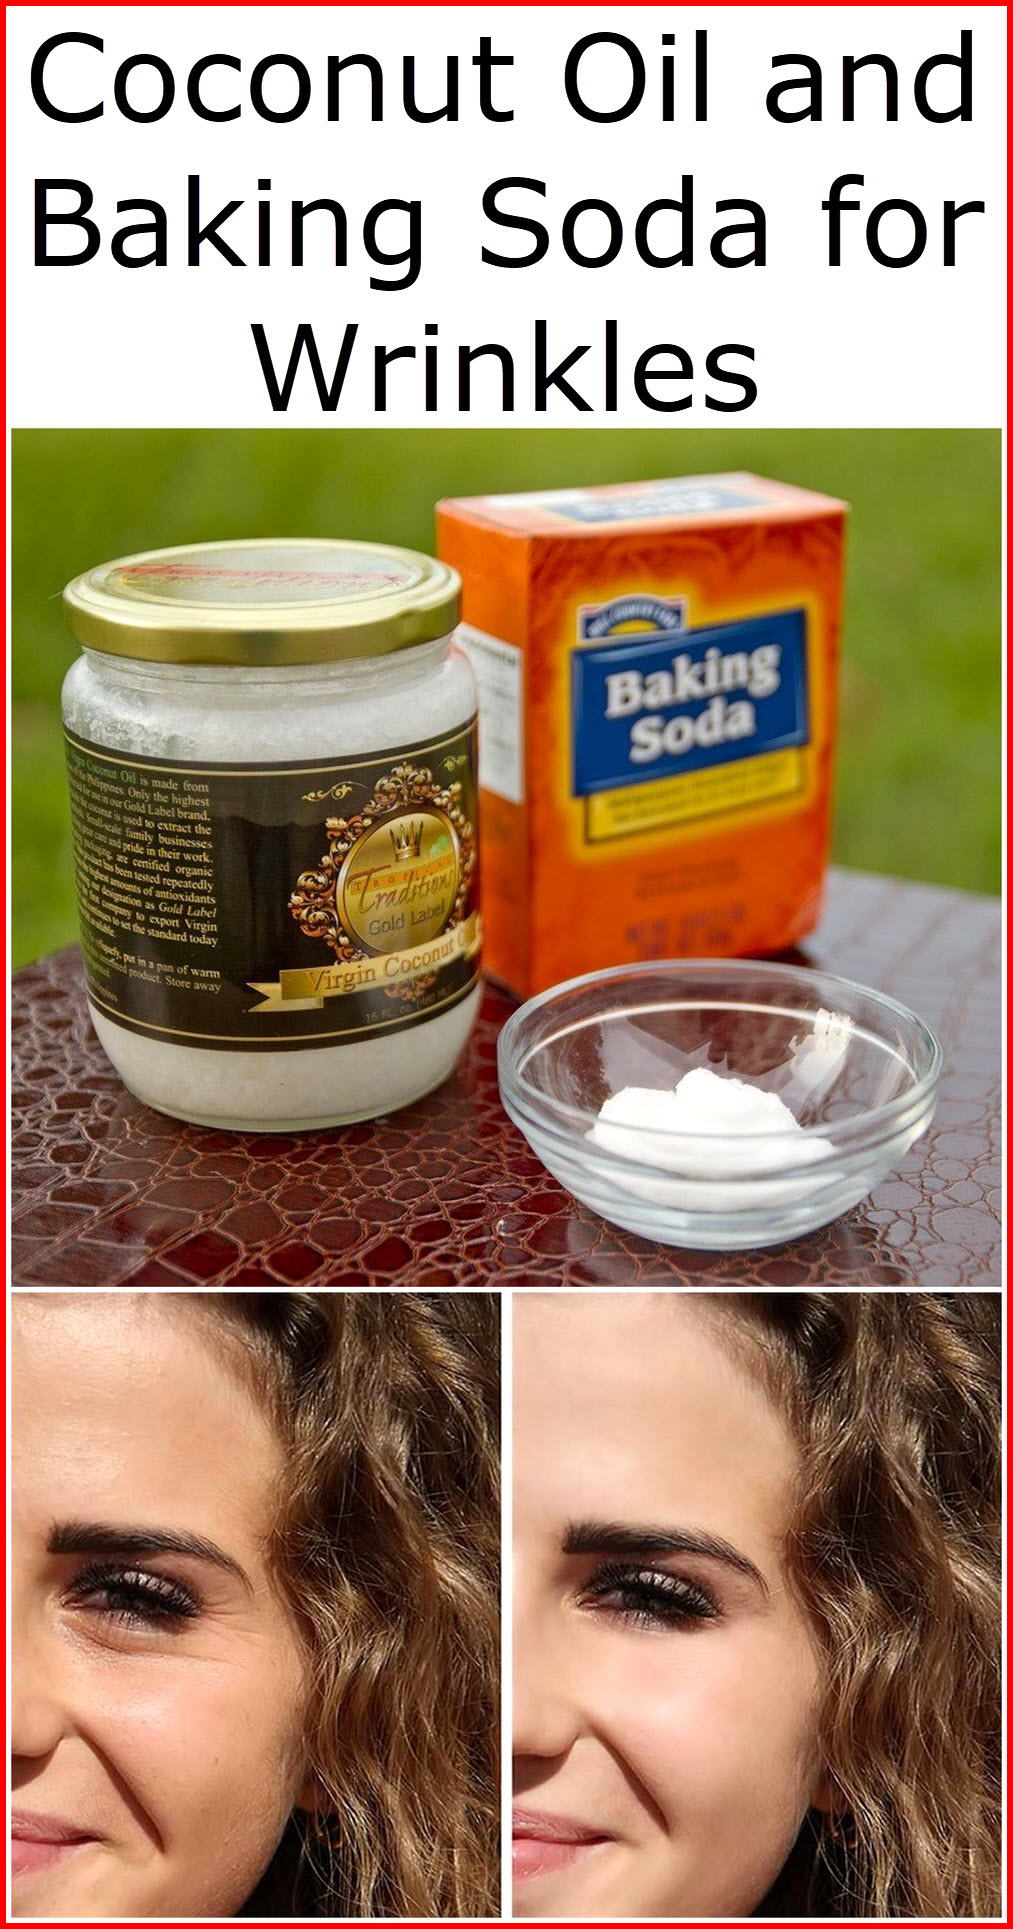 Coconut Oil and Baking Soda for Wrinkles | Baking Soda ...